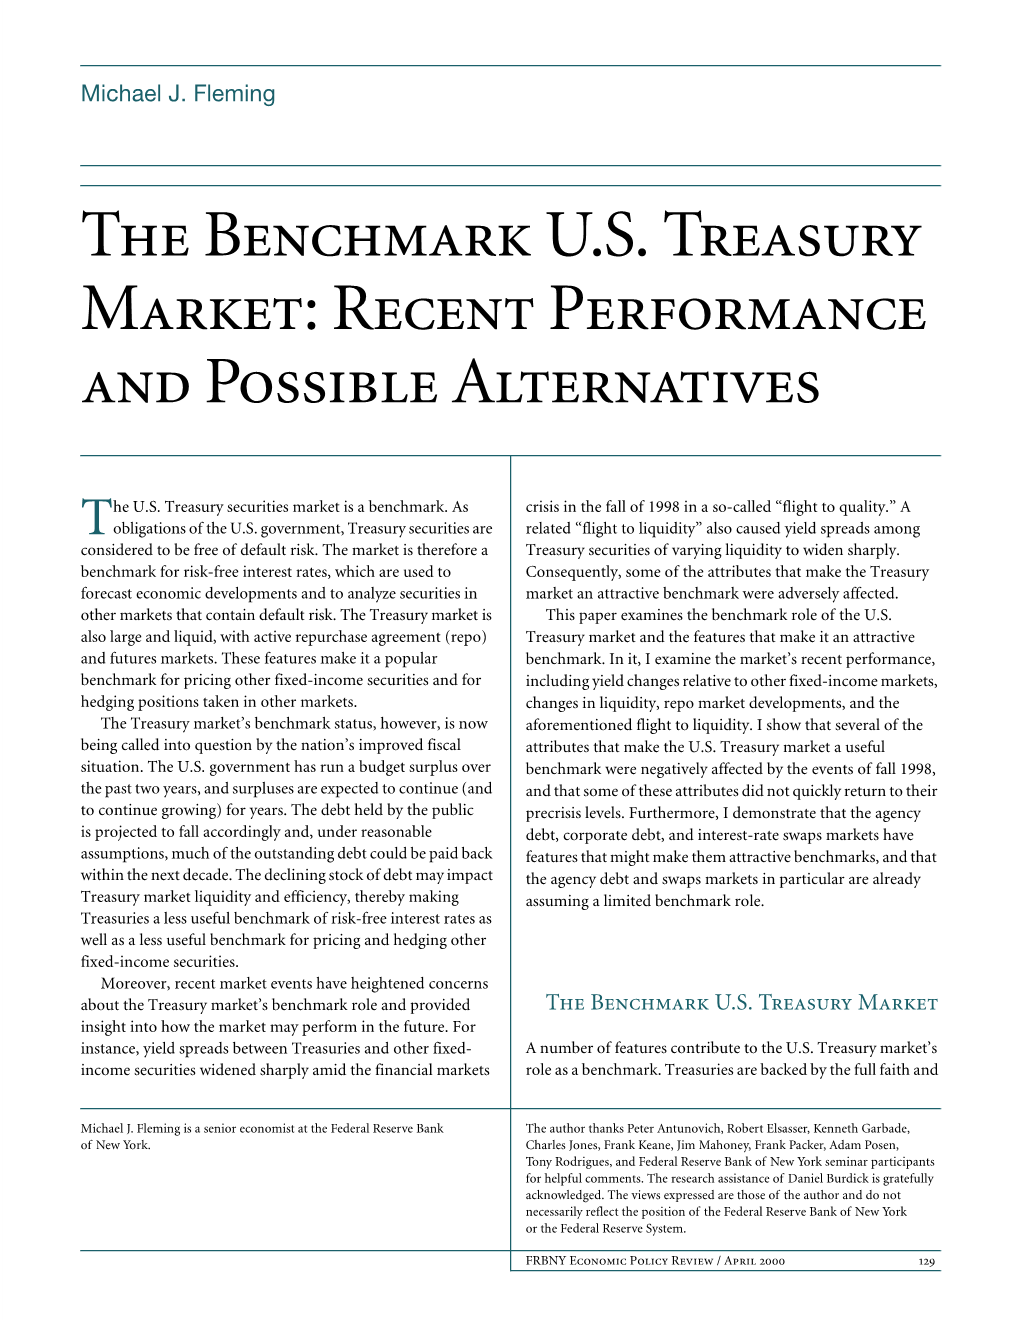 The Benchmark US Treasury Market: Recent Performance